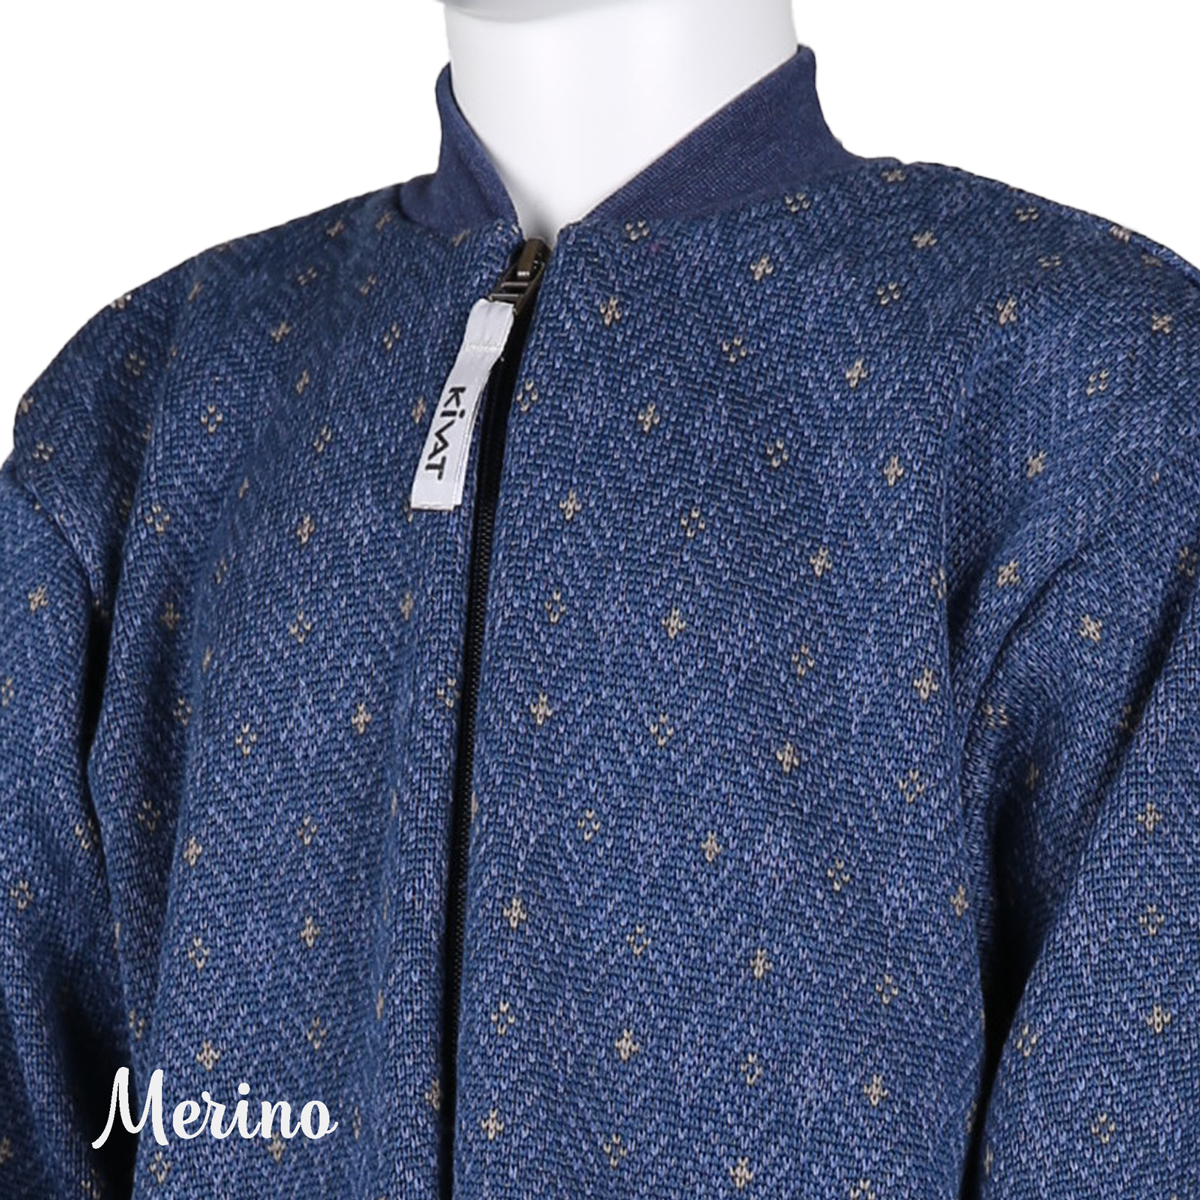 Frost Merino wool overall